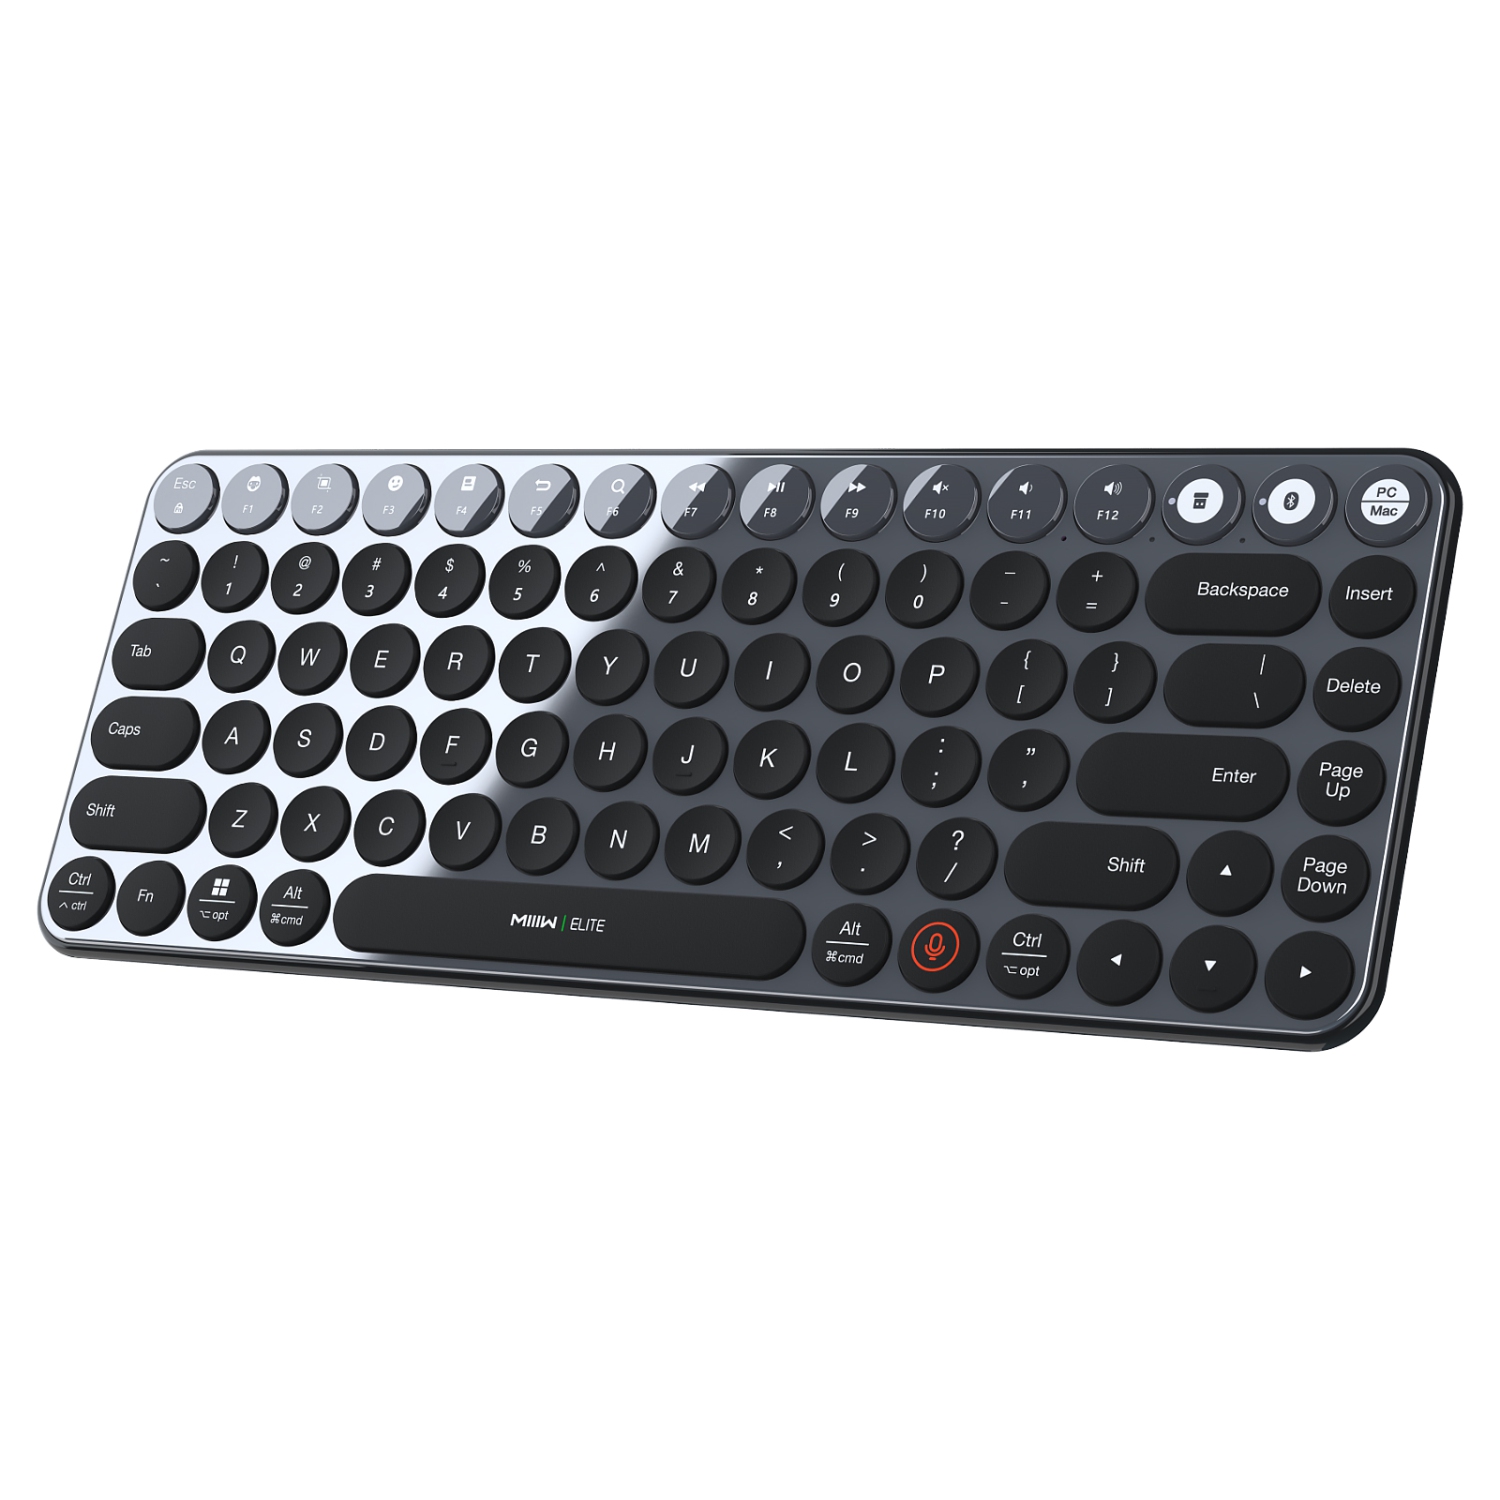 XIAOMI MIIIW K06 Elite Wireless Bluetooth Keyboard for Mac and Windows, 2.4G Keyboard with 85 Scissor Switch Keys